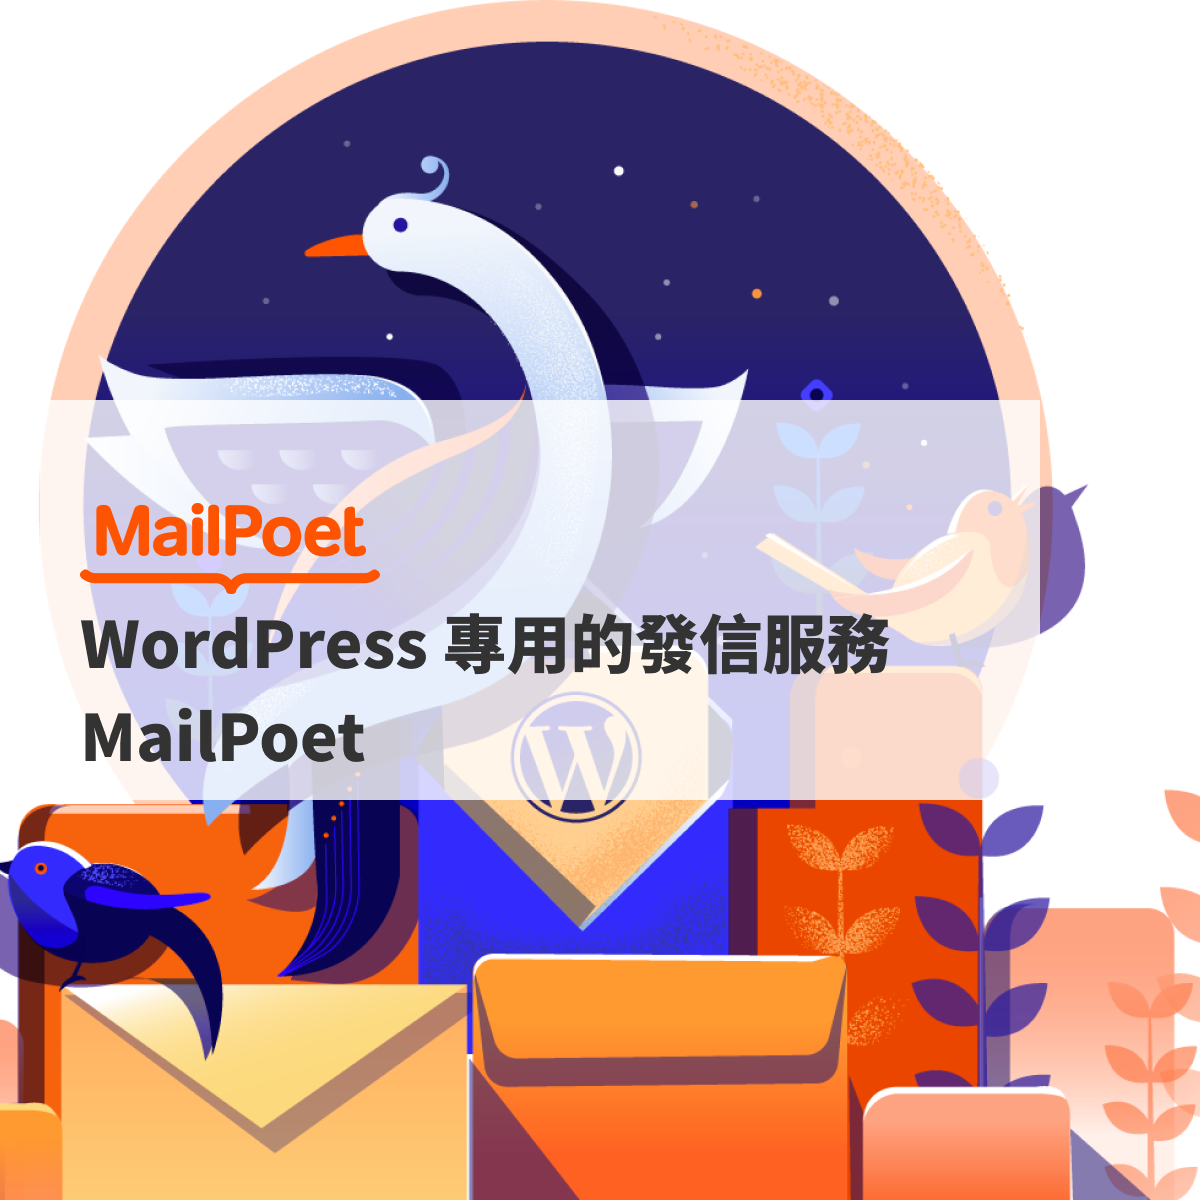 WordPress 專用的發信服務 MailPoet